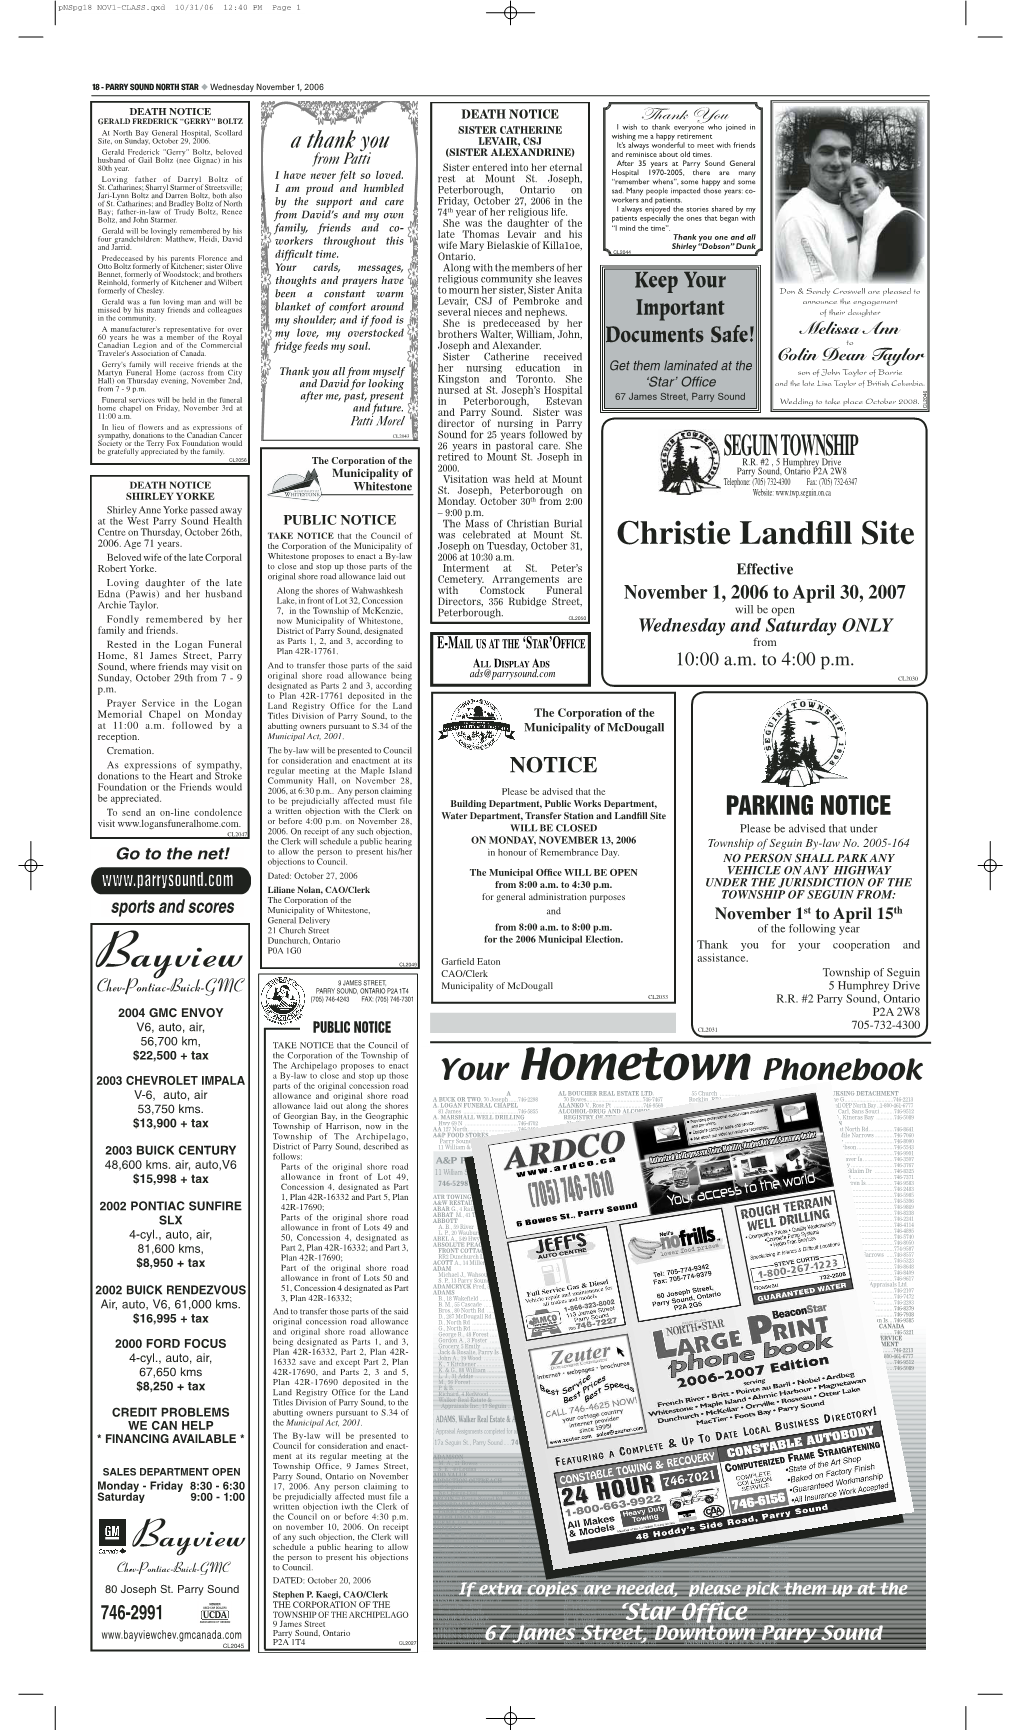 Your Hometown Phonebook 2003 CHEVROLET IMPALA Parts of the Original Concession Road a AL BOUCHER REAL ESTATE LTD